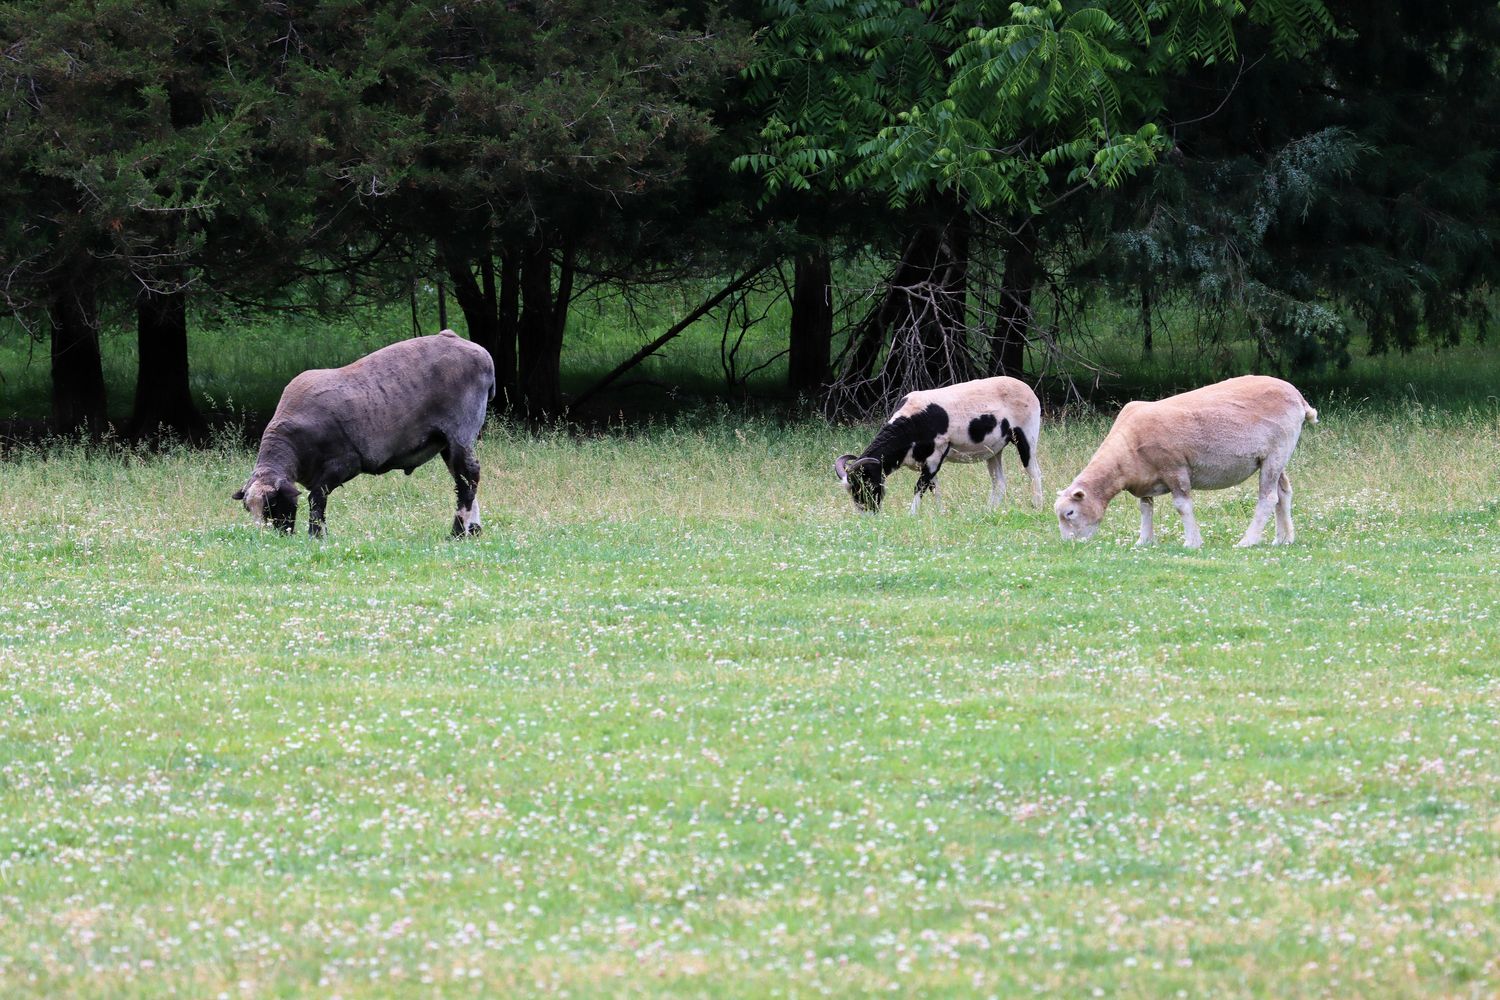 Sheep grazing in a clover field at Woolverton Inn - Stockton, NJ